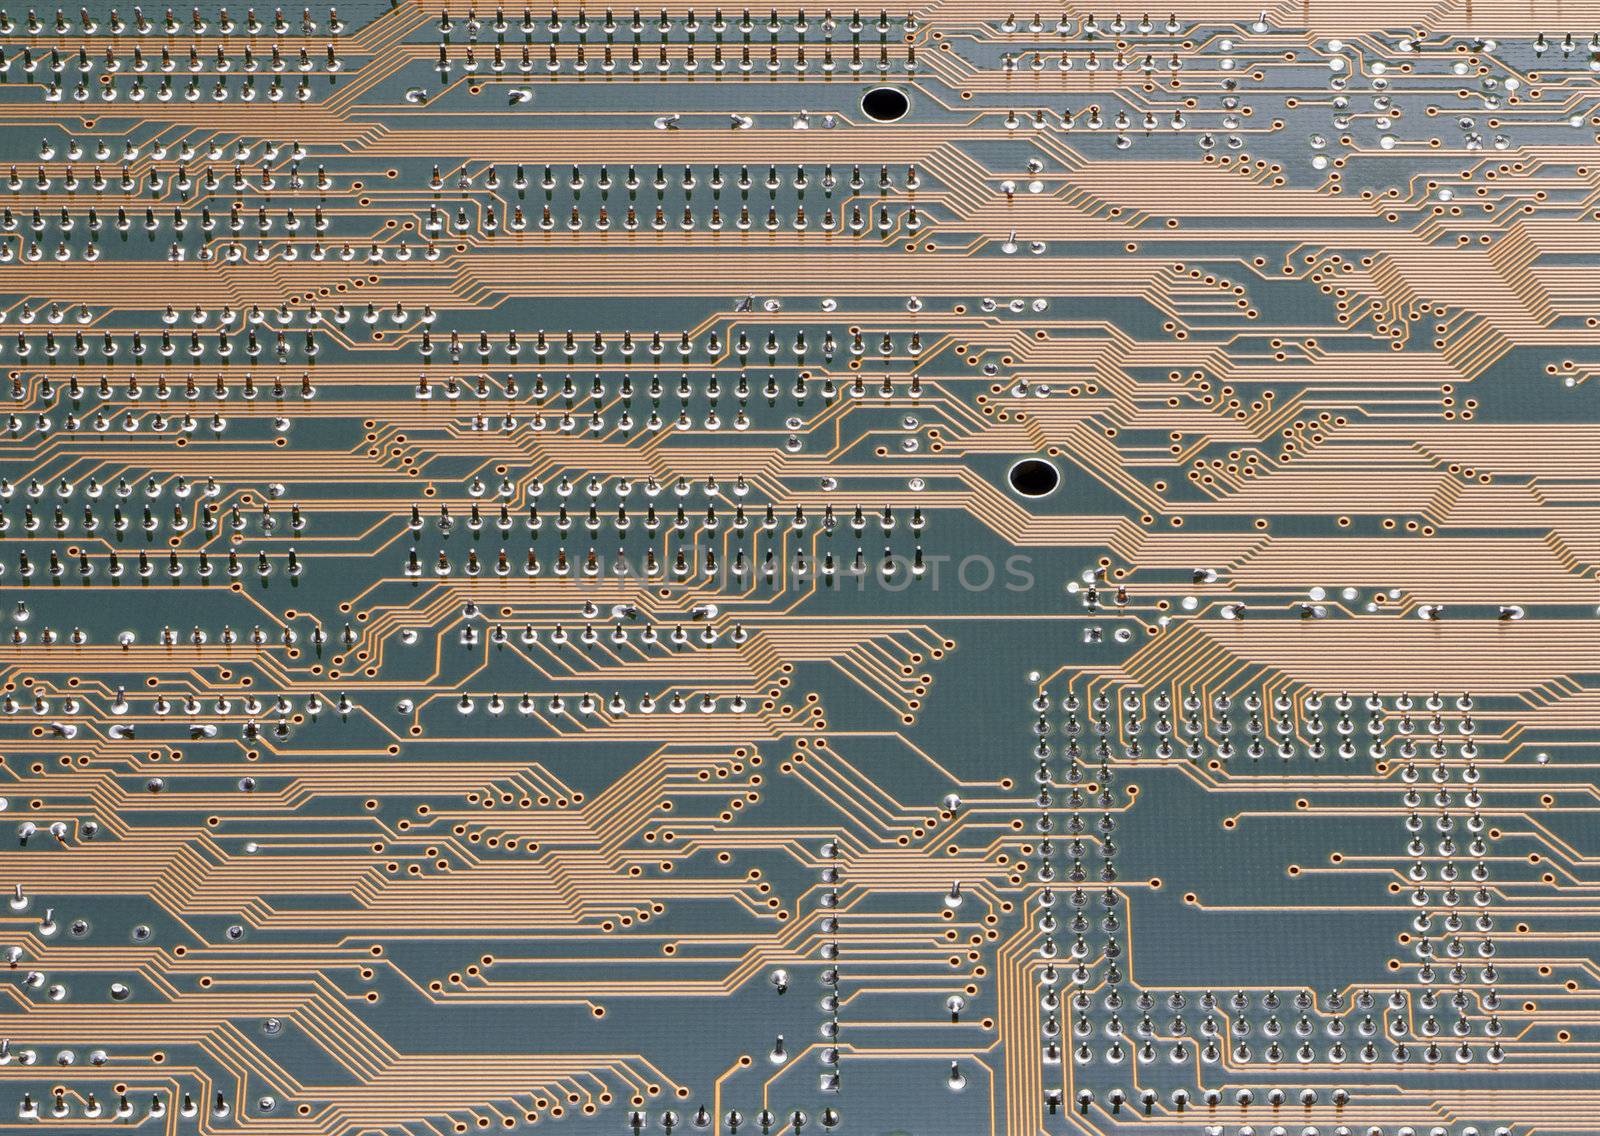 Computer motherboard by Baltus